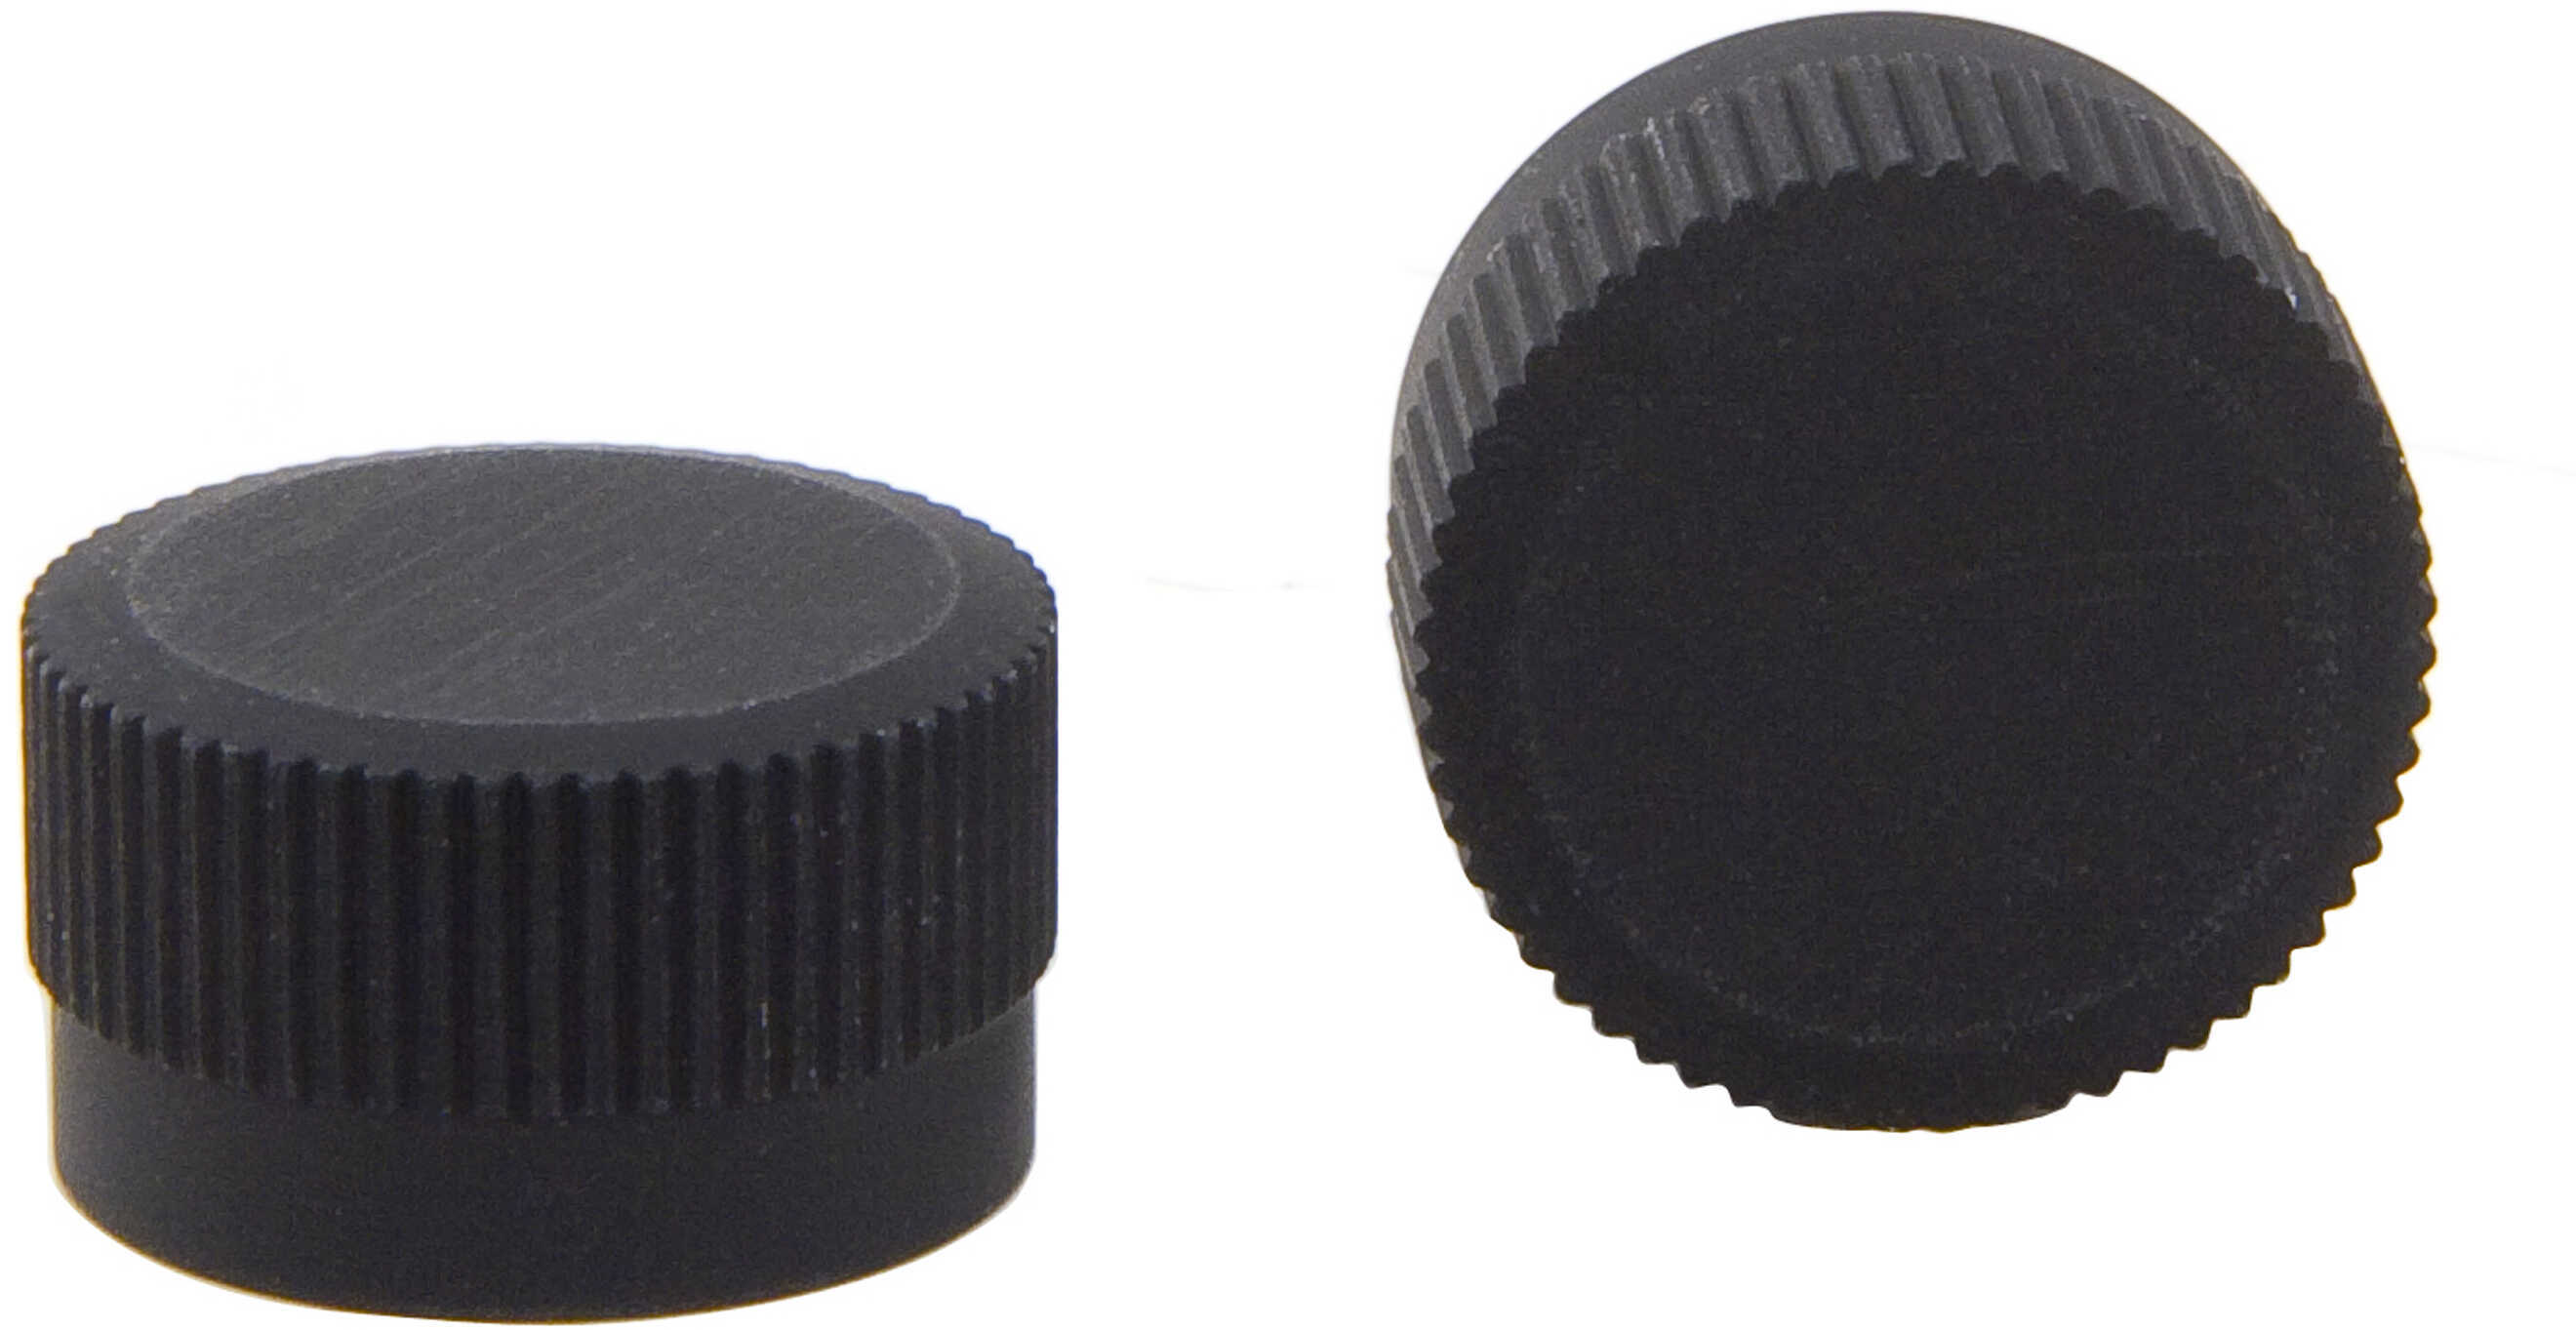 Trijicon ACOG Adjuster Caps Fits 1.5x16S 1.5x24 2x20 3x24 and 3x30 Models Black Finish